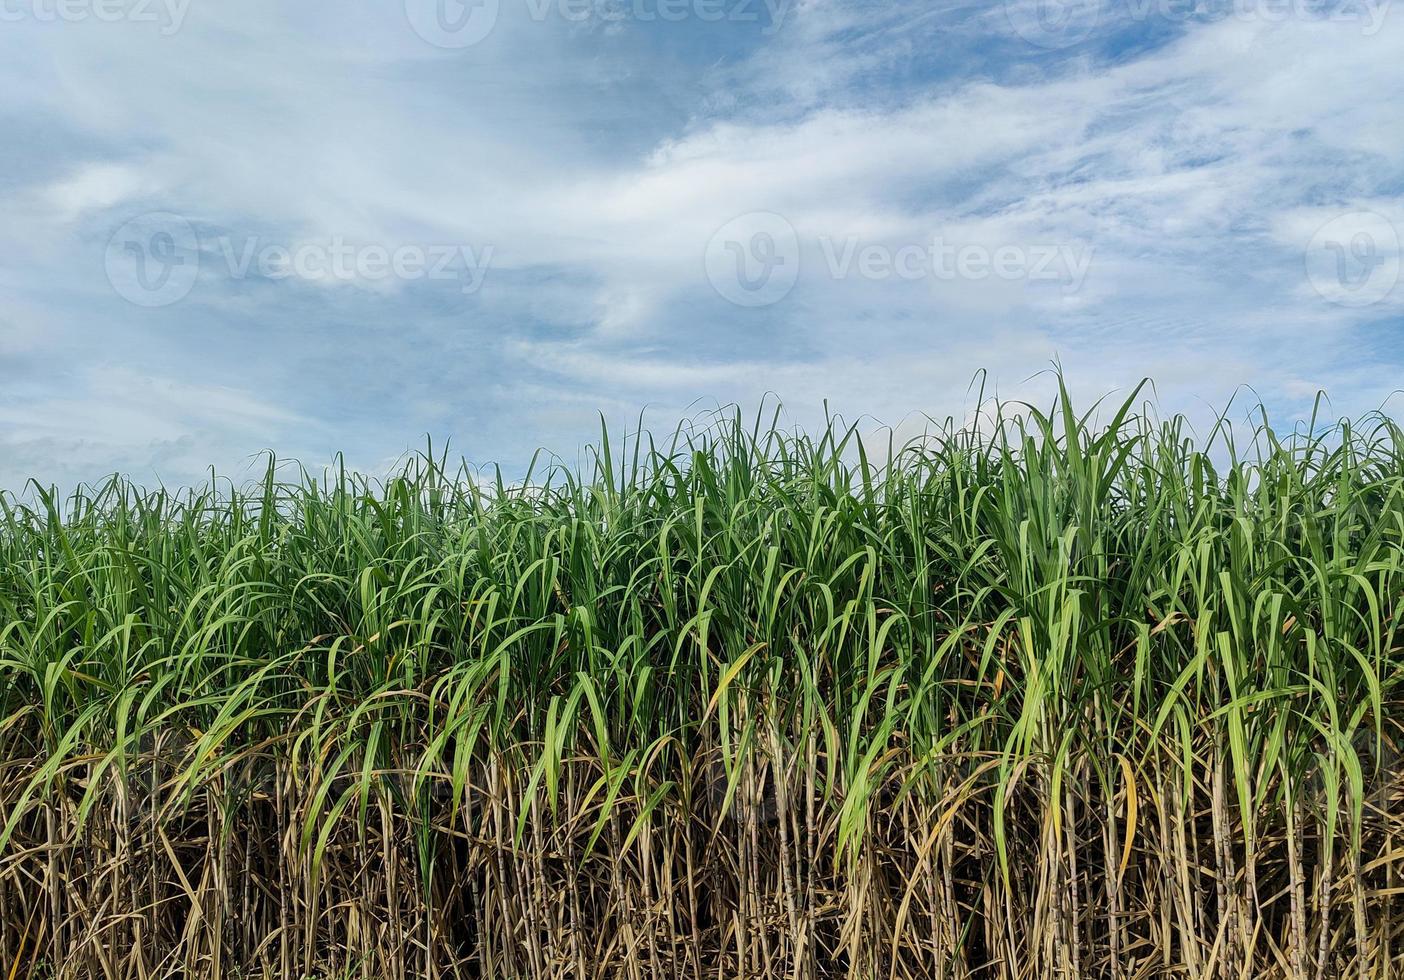 Sugarcane fields and blue sky photo